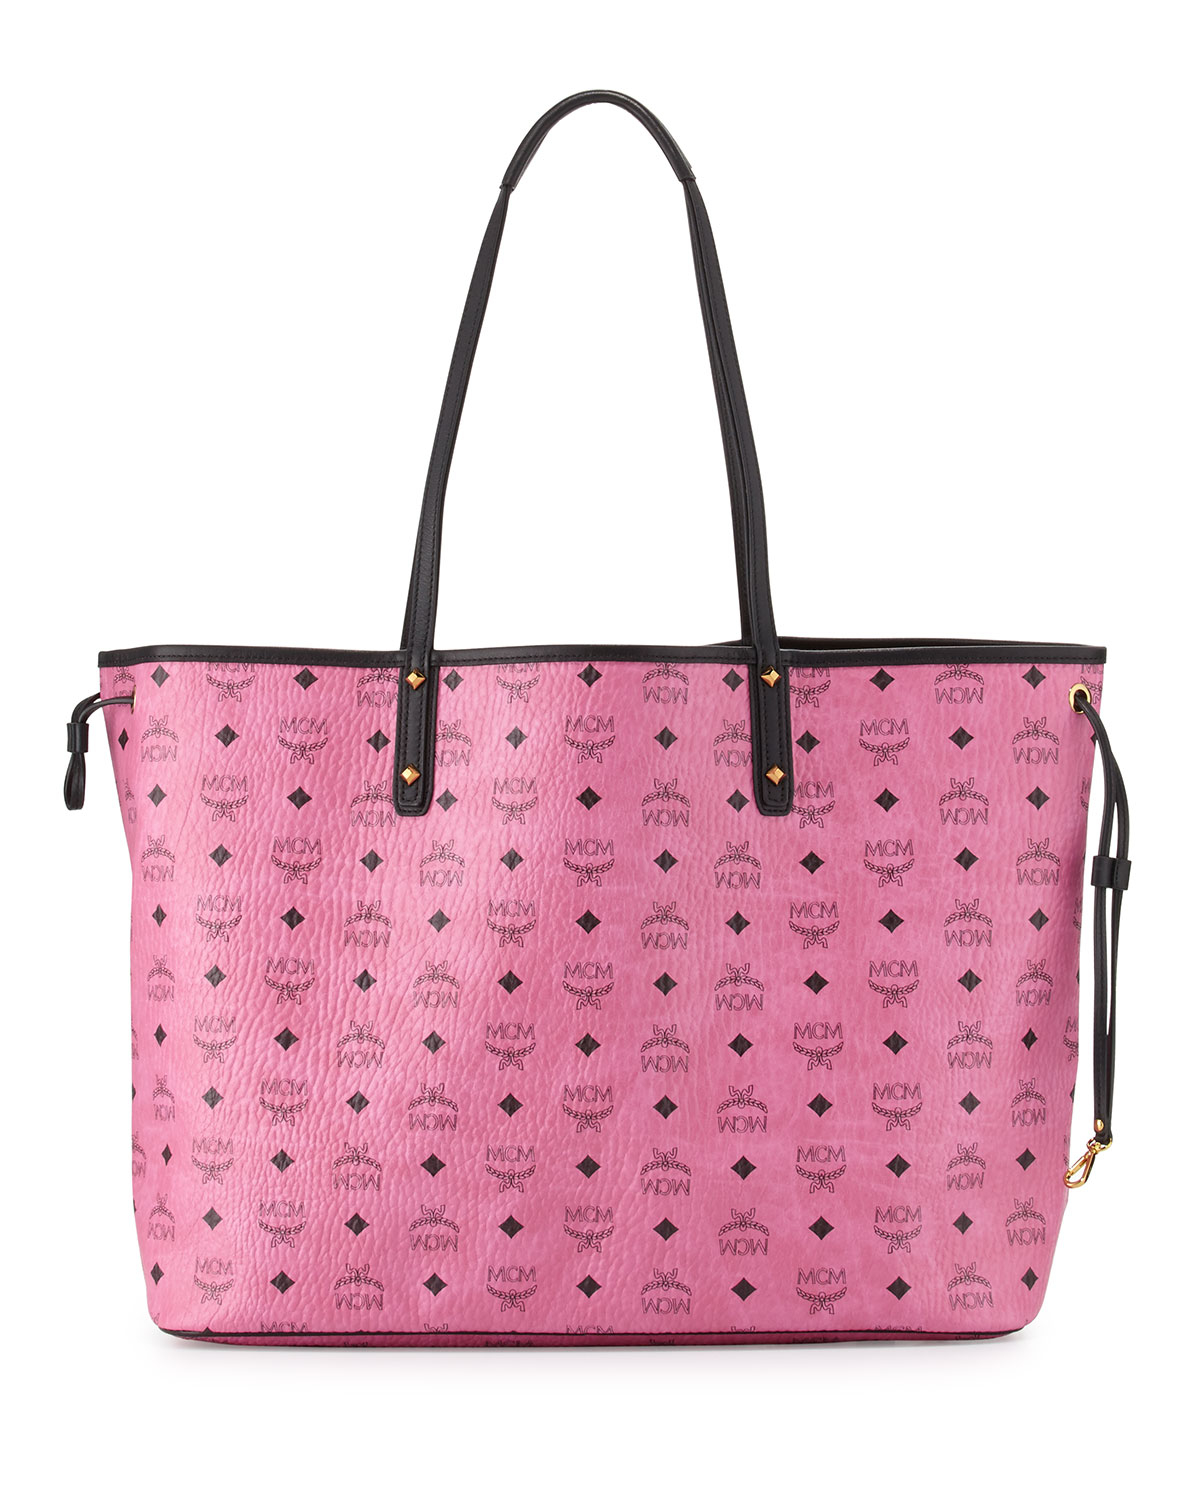 Lyst - Mcm Large Reversible Shopper Tote Bag in Pink